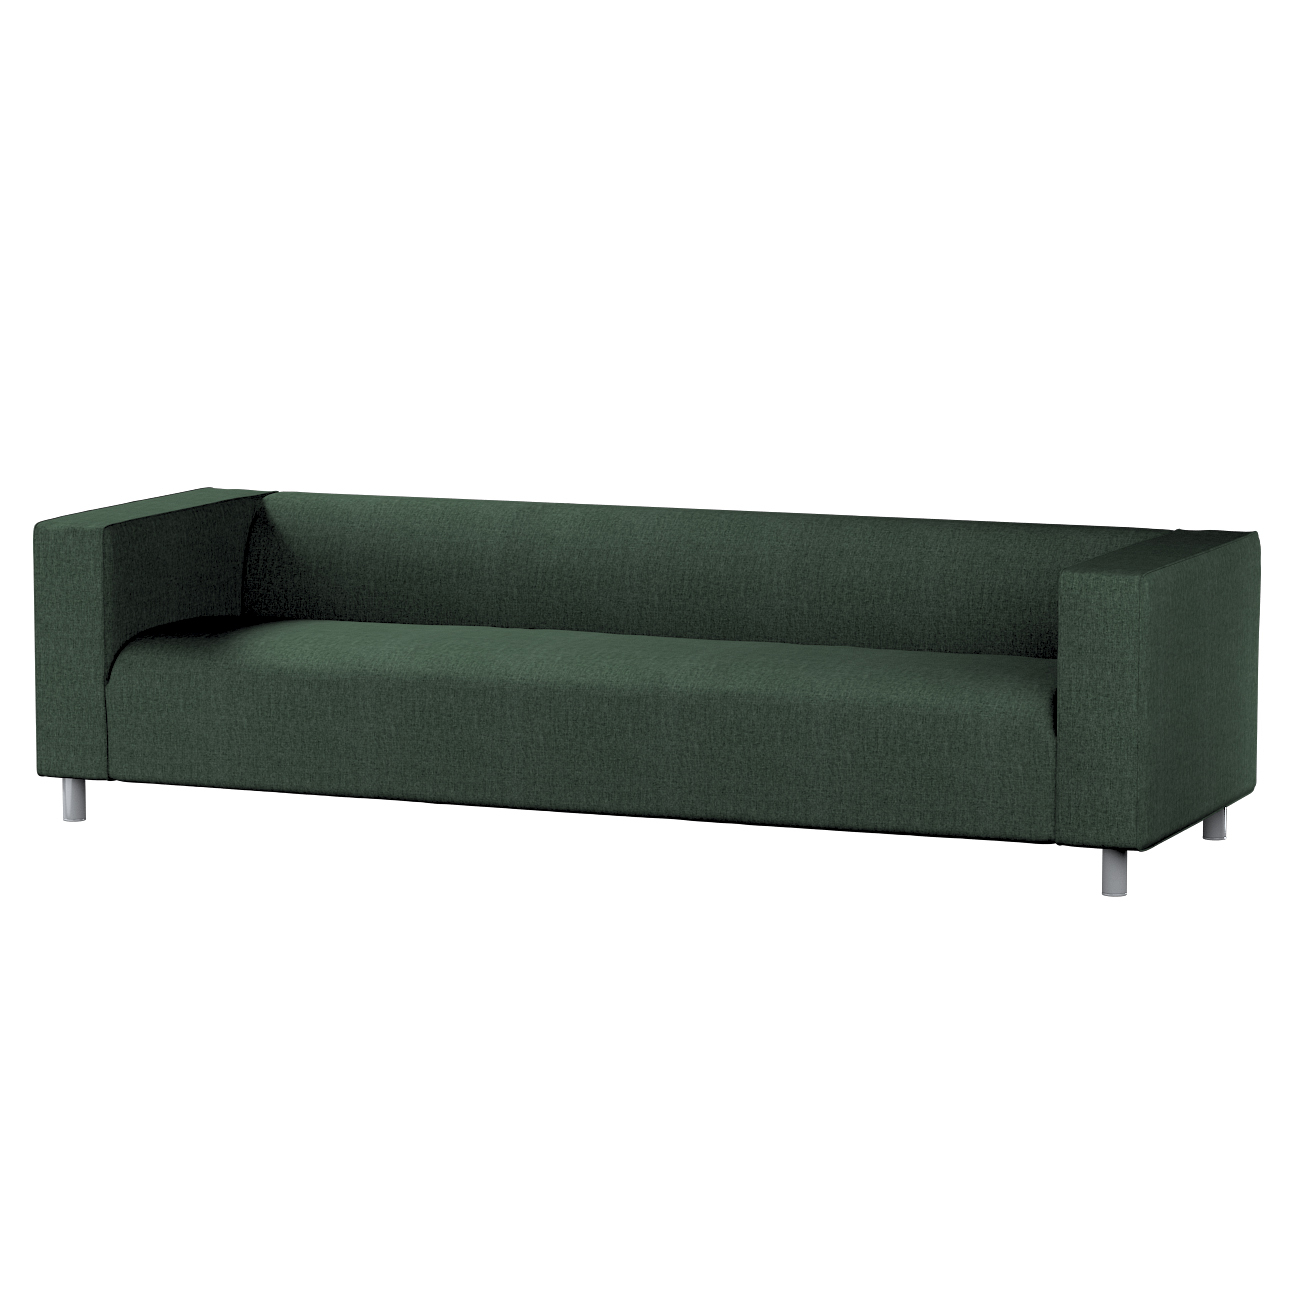 Bezug für Klippan 4-Sitzer Sofa, dunkelgrün, Bezug für Klippan 4-Sitzer, Ci günstig online kaufen